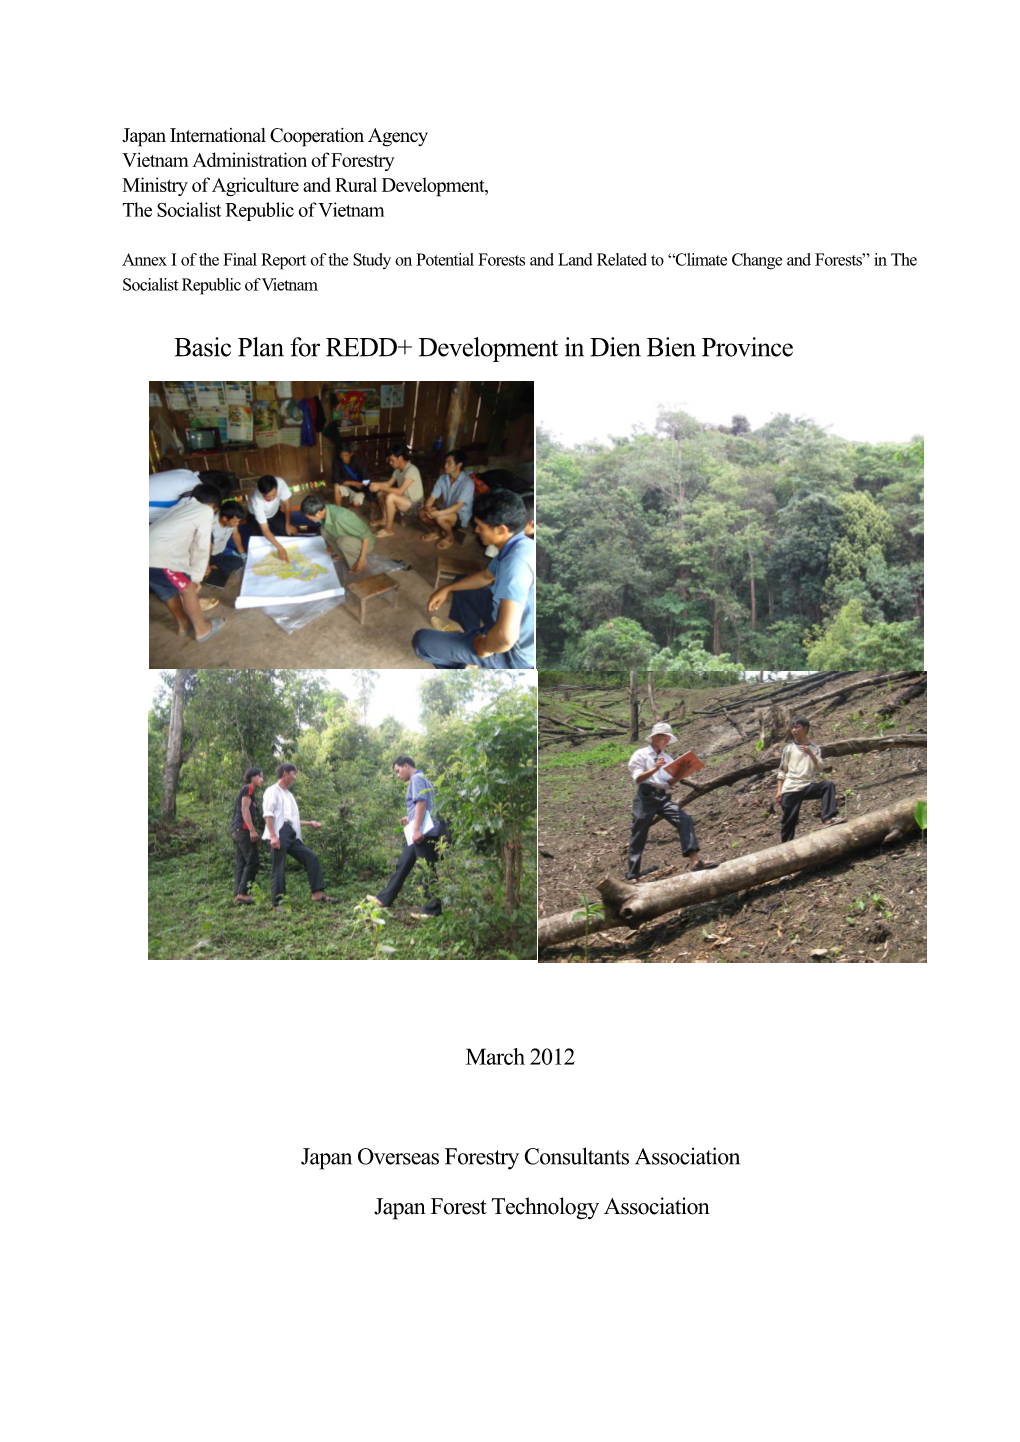 Basic Plan for REDD+ Development in Dien Bien Province